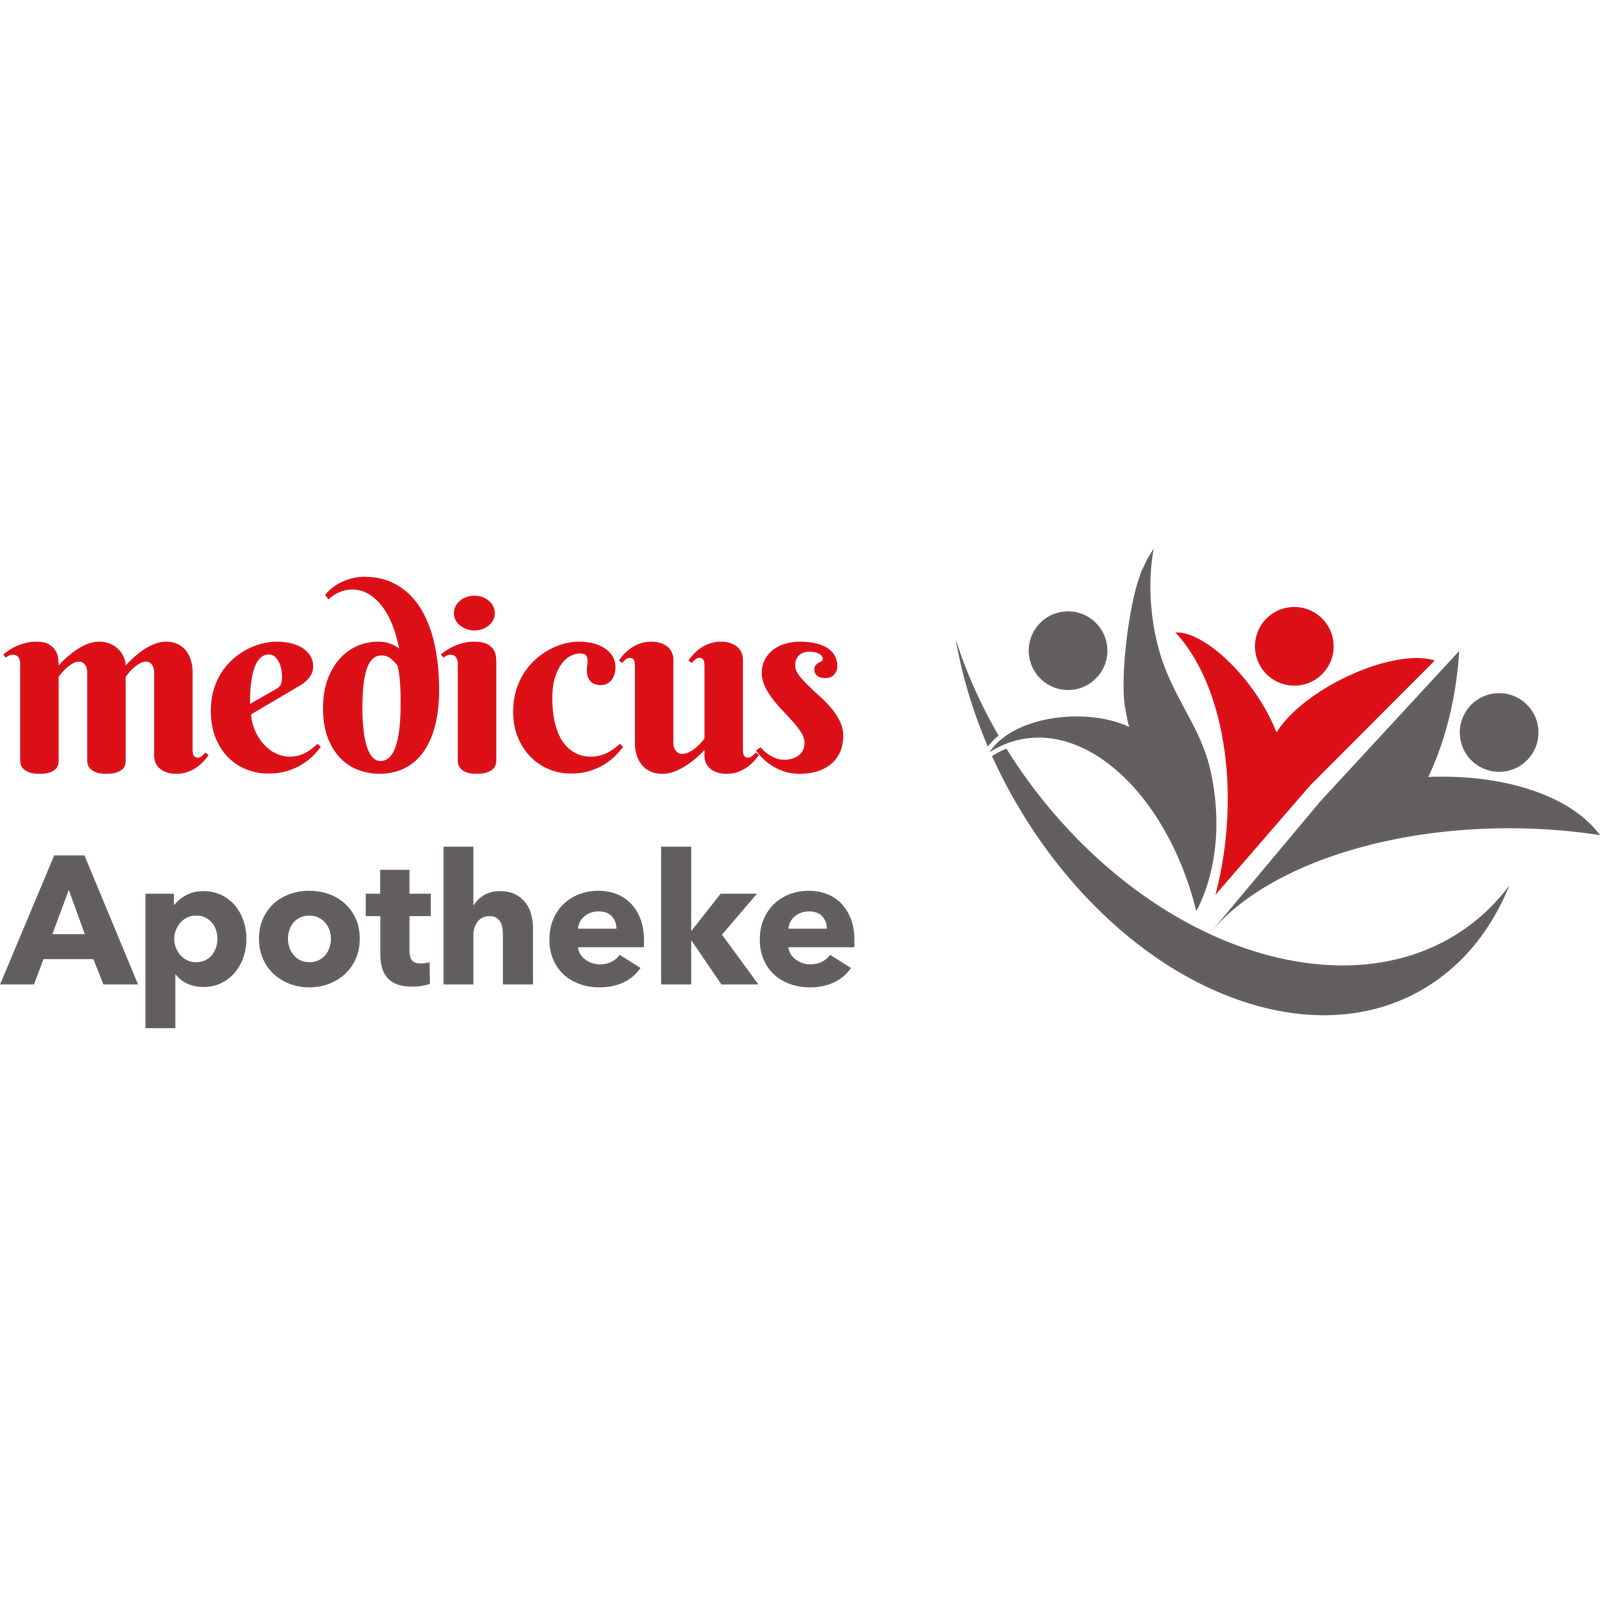 medicus Apotheke in Dortmund